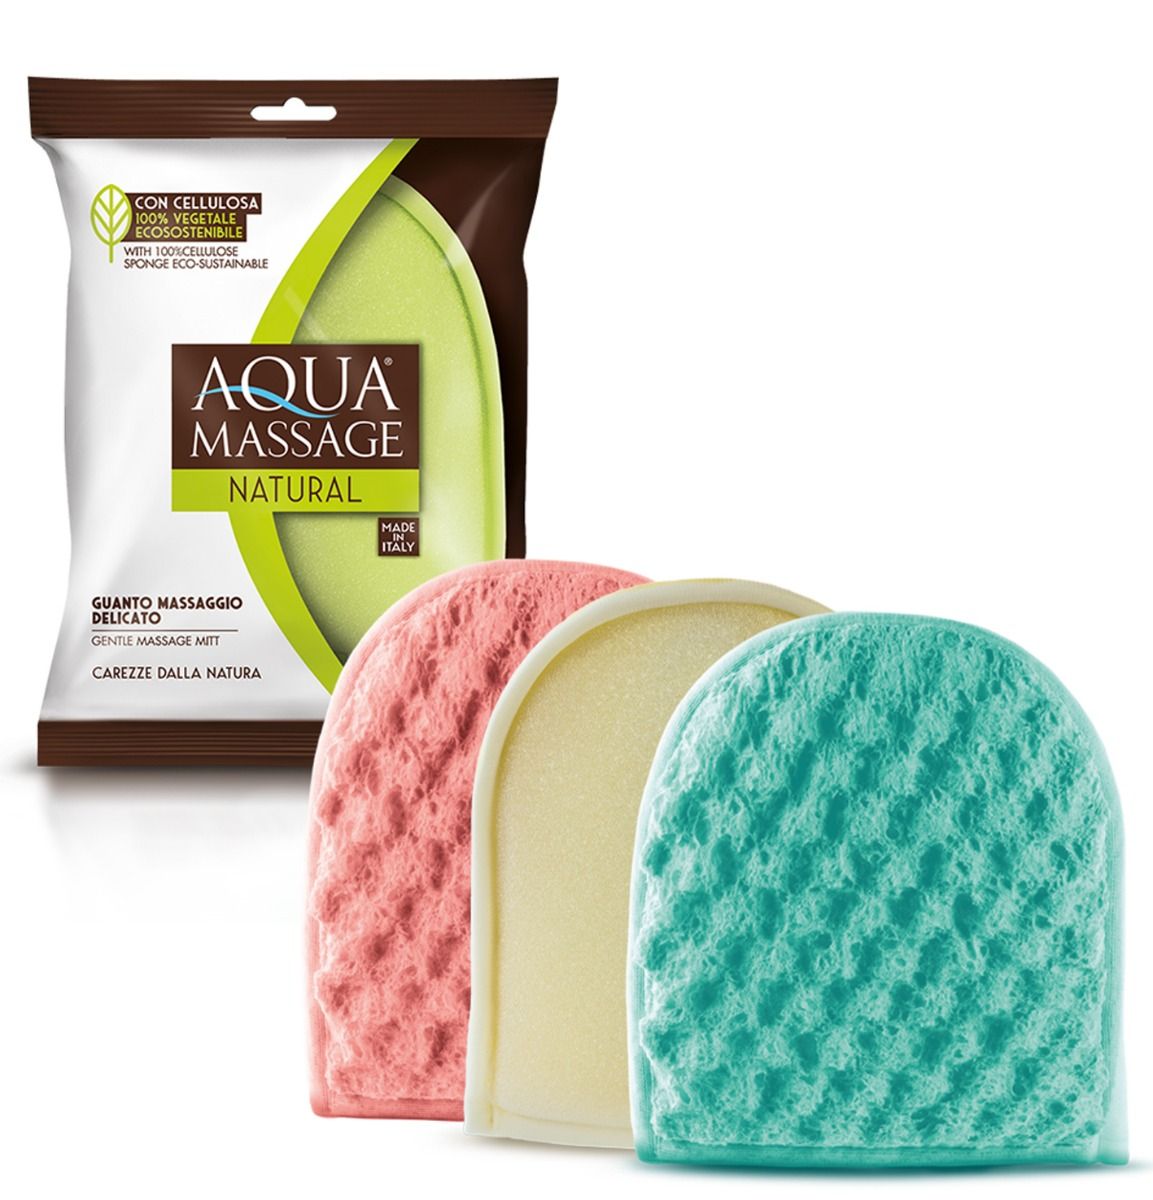 Aqua Massage - Natural - Delicate Massage Glove